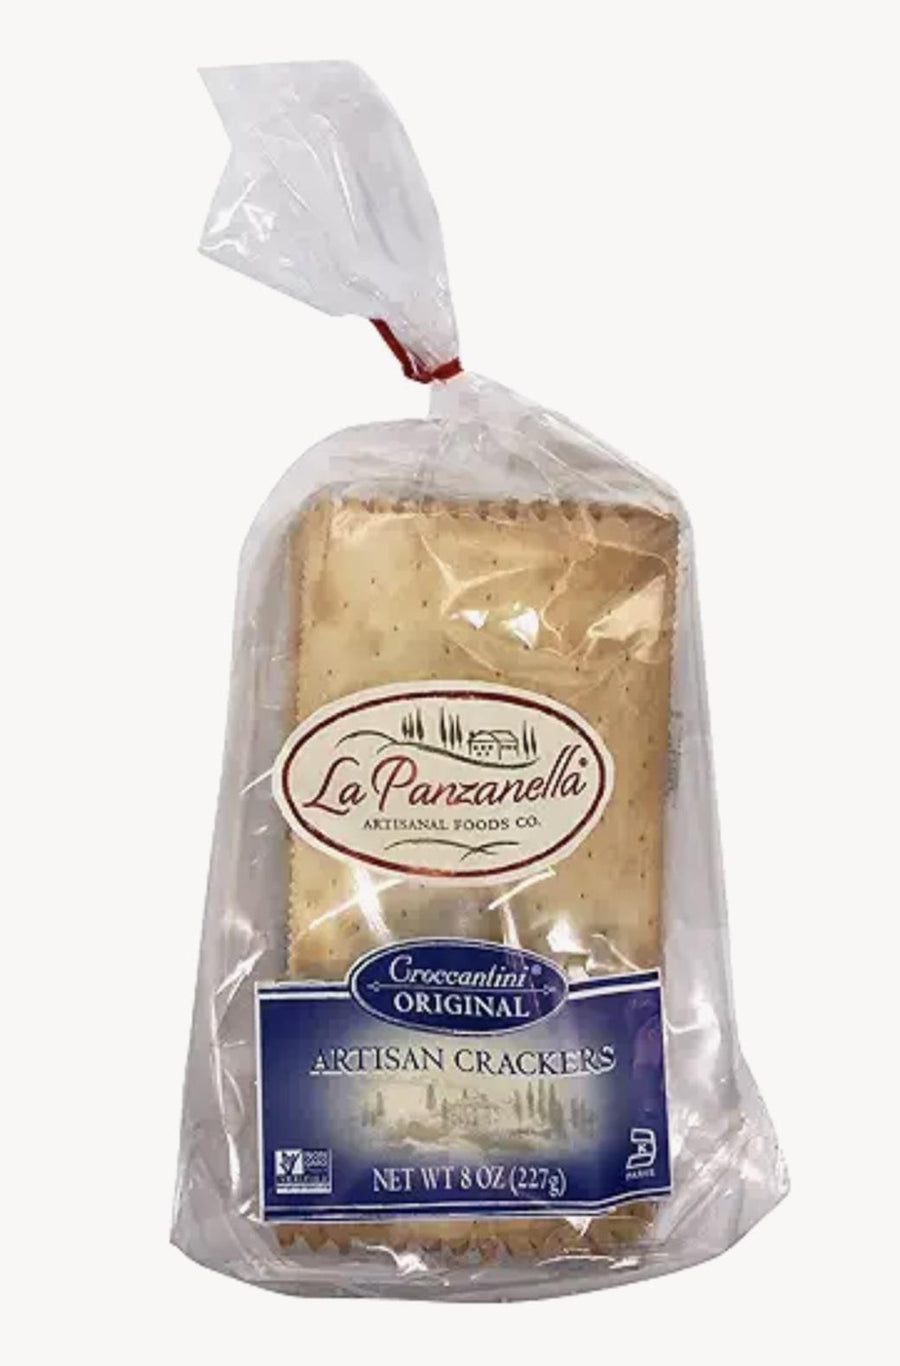 La Panzanella - Artisan Crackers